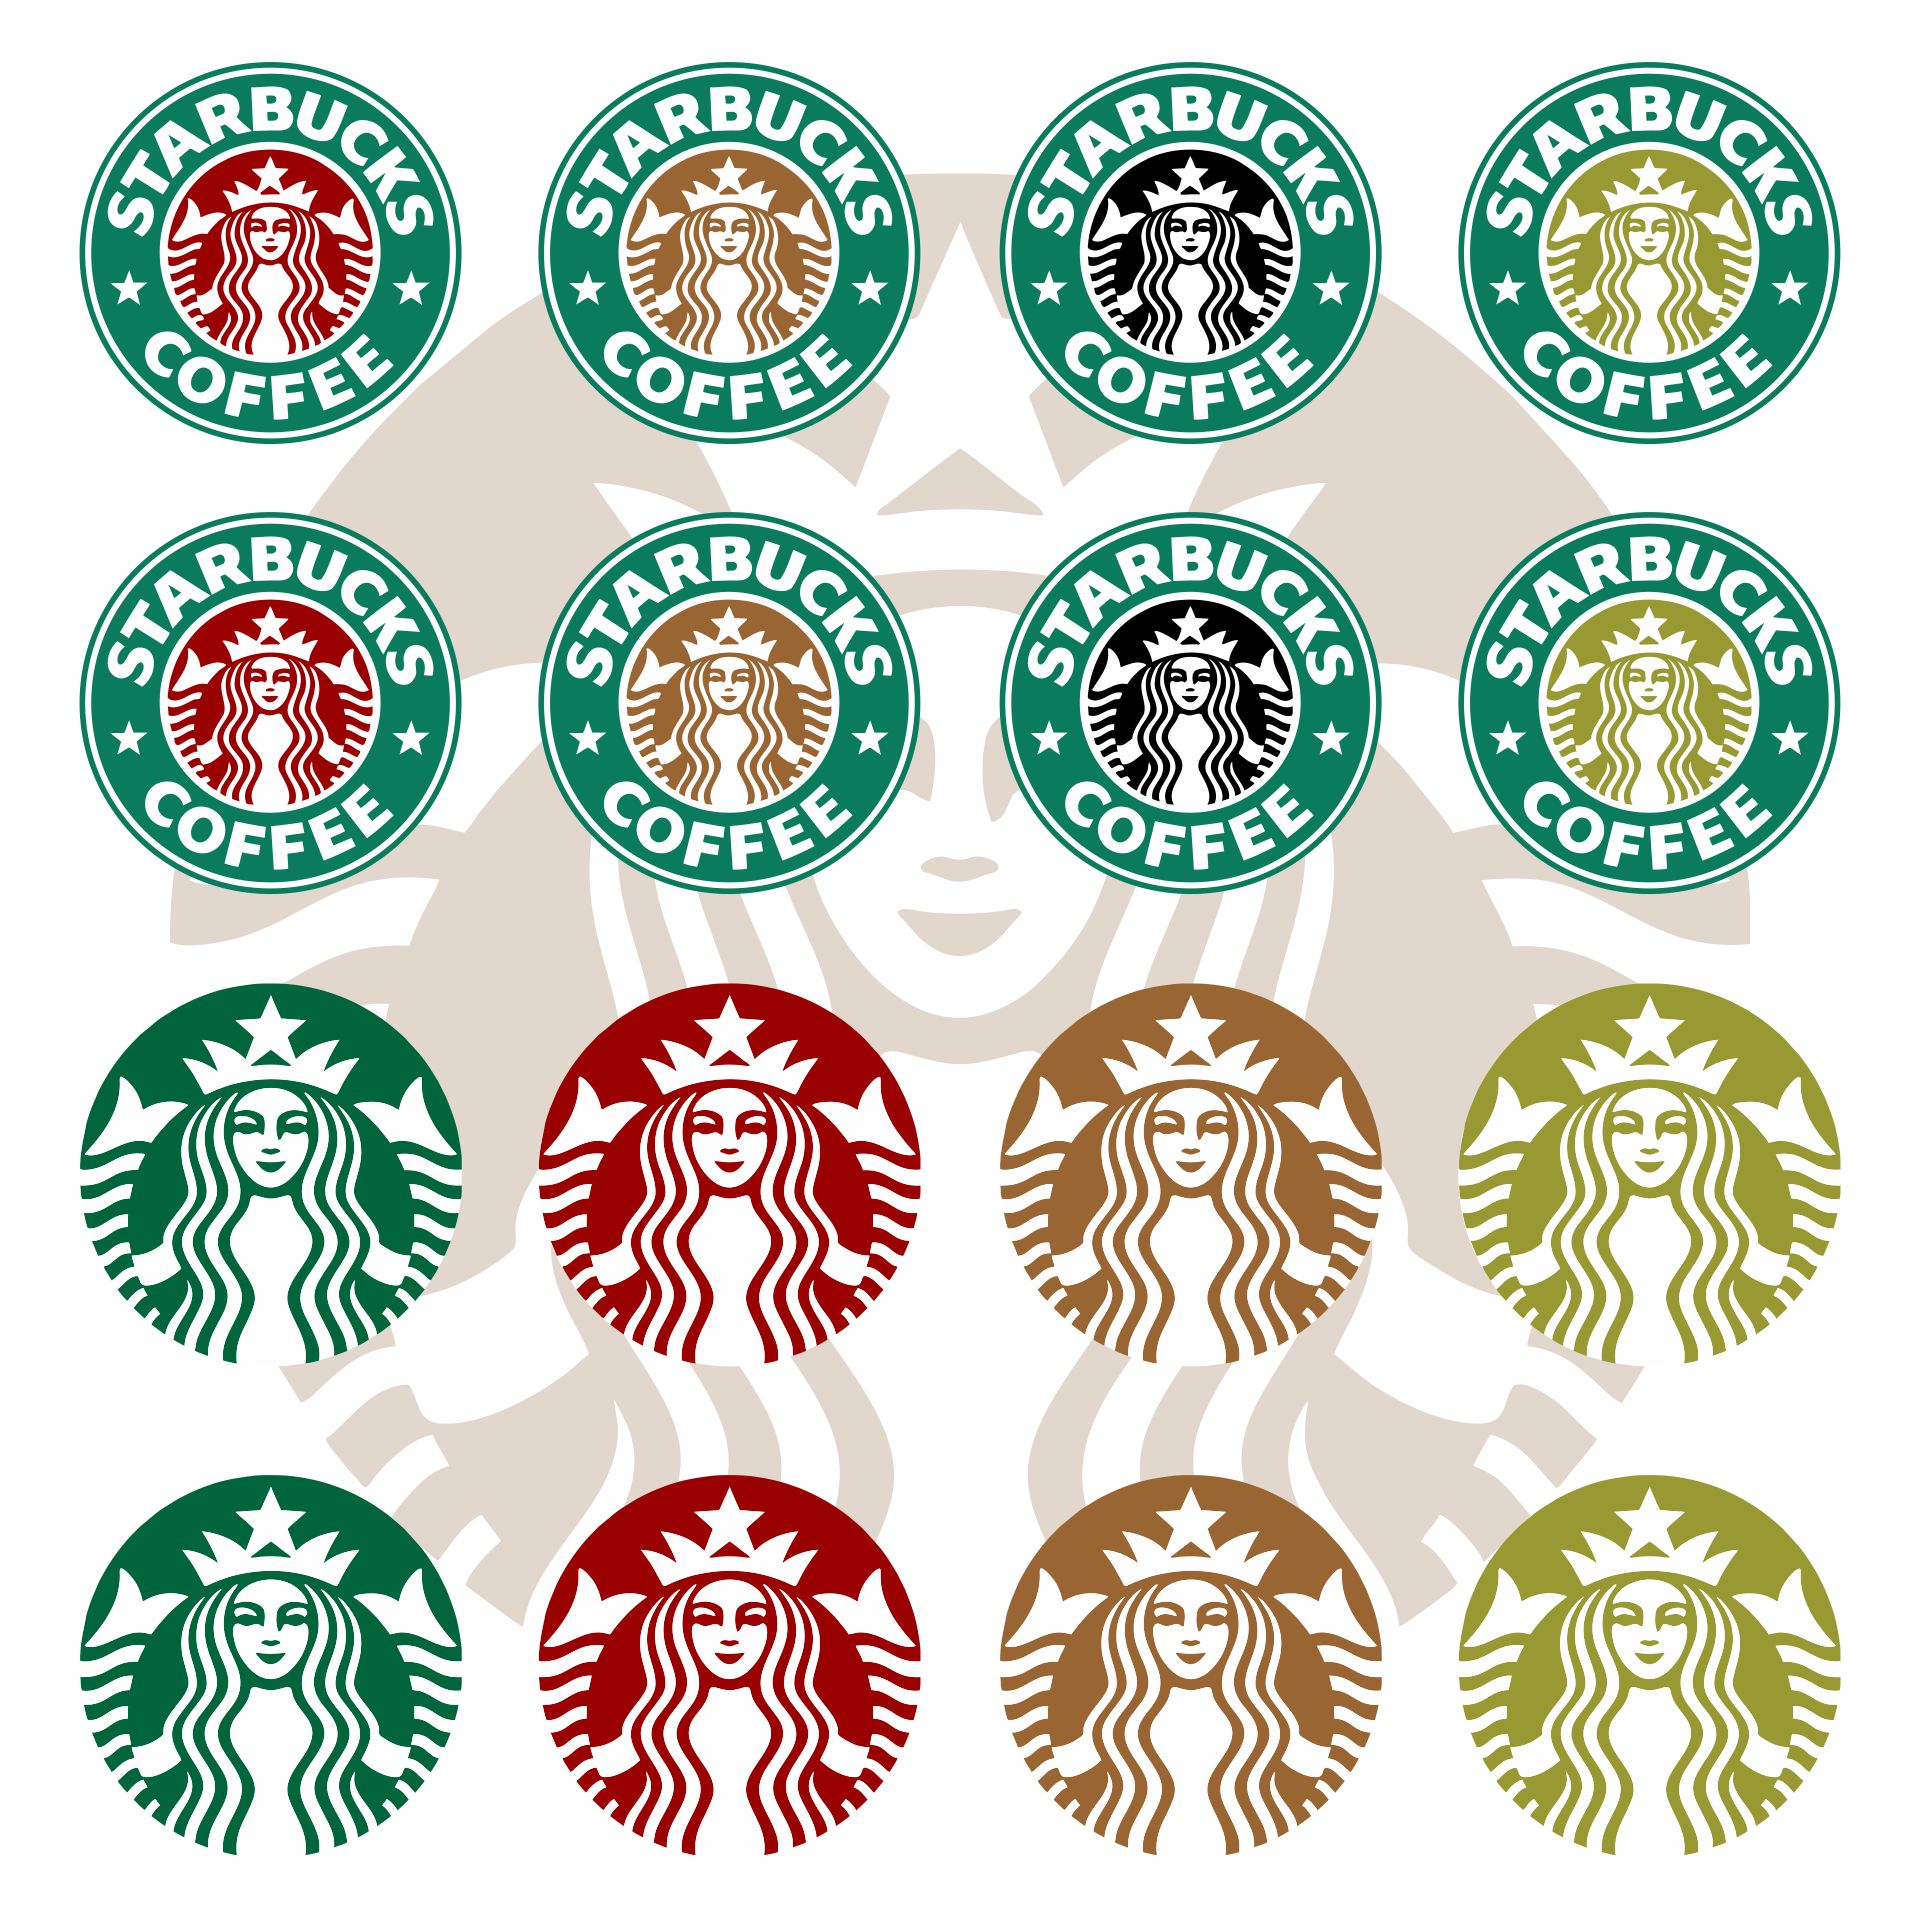 8 Best Images of Starbucks Coffee Logo Printable Starbucks